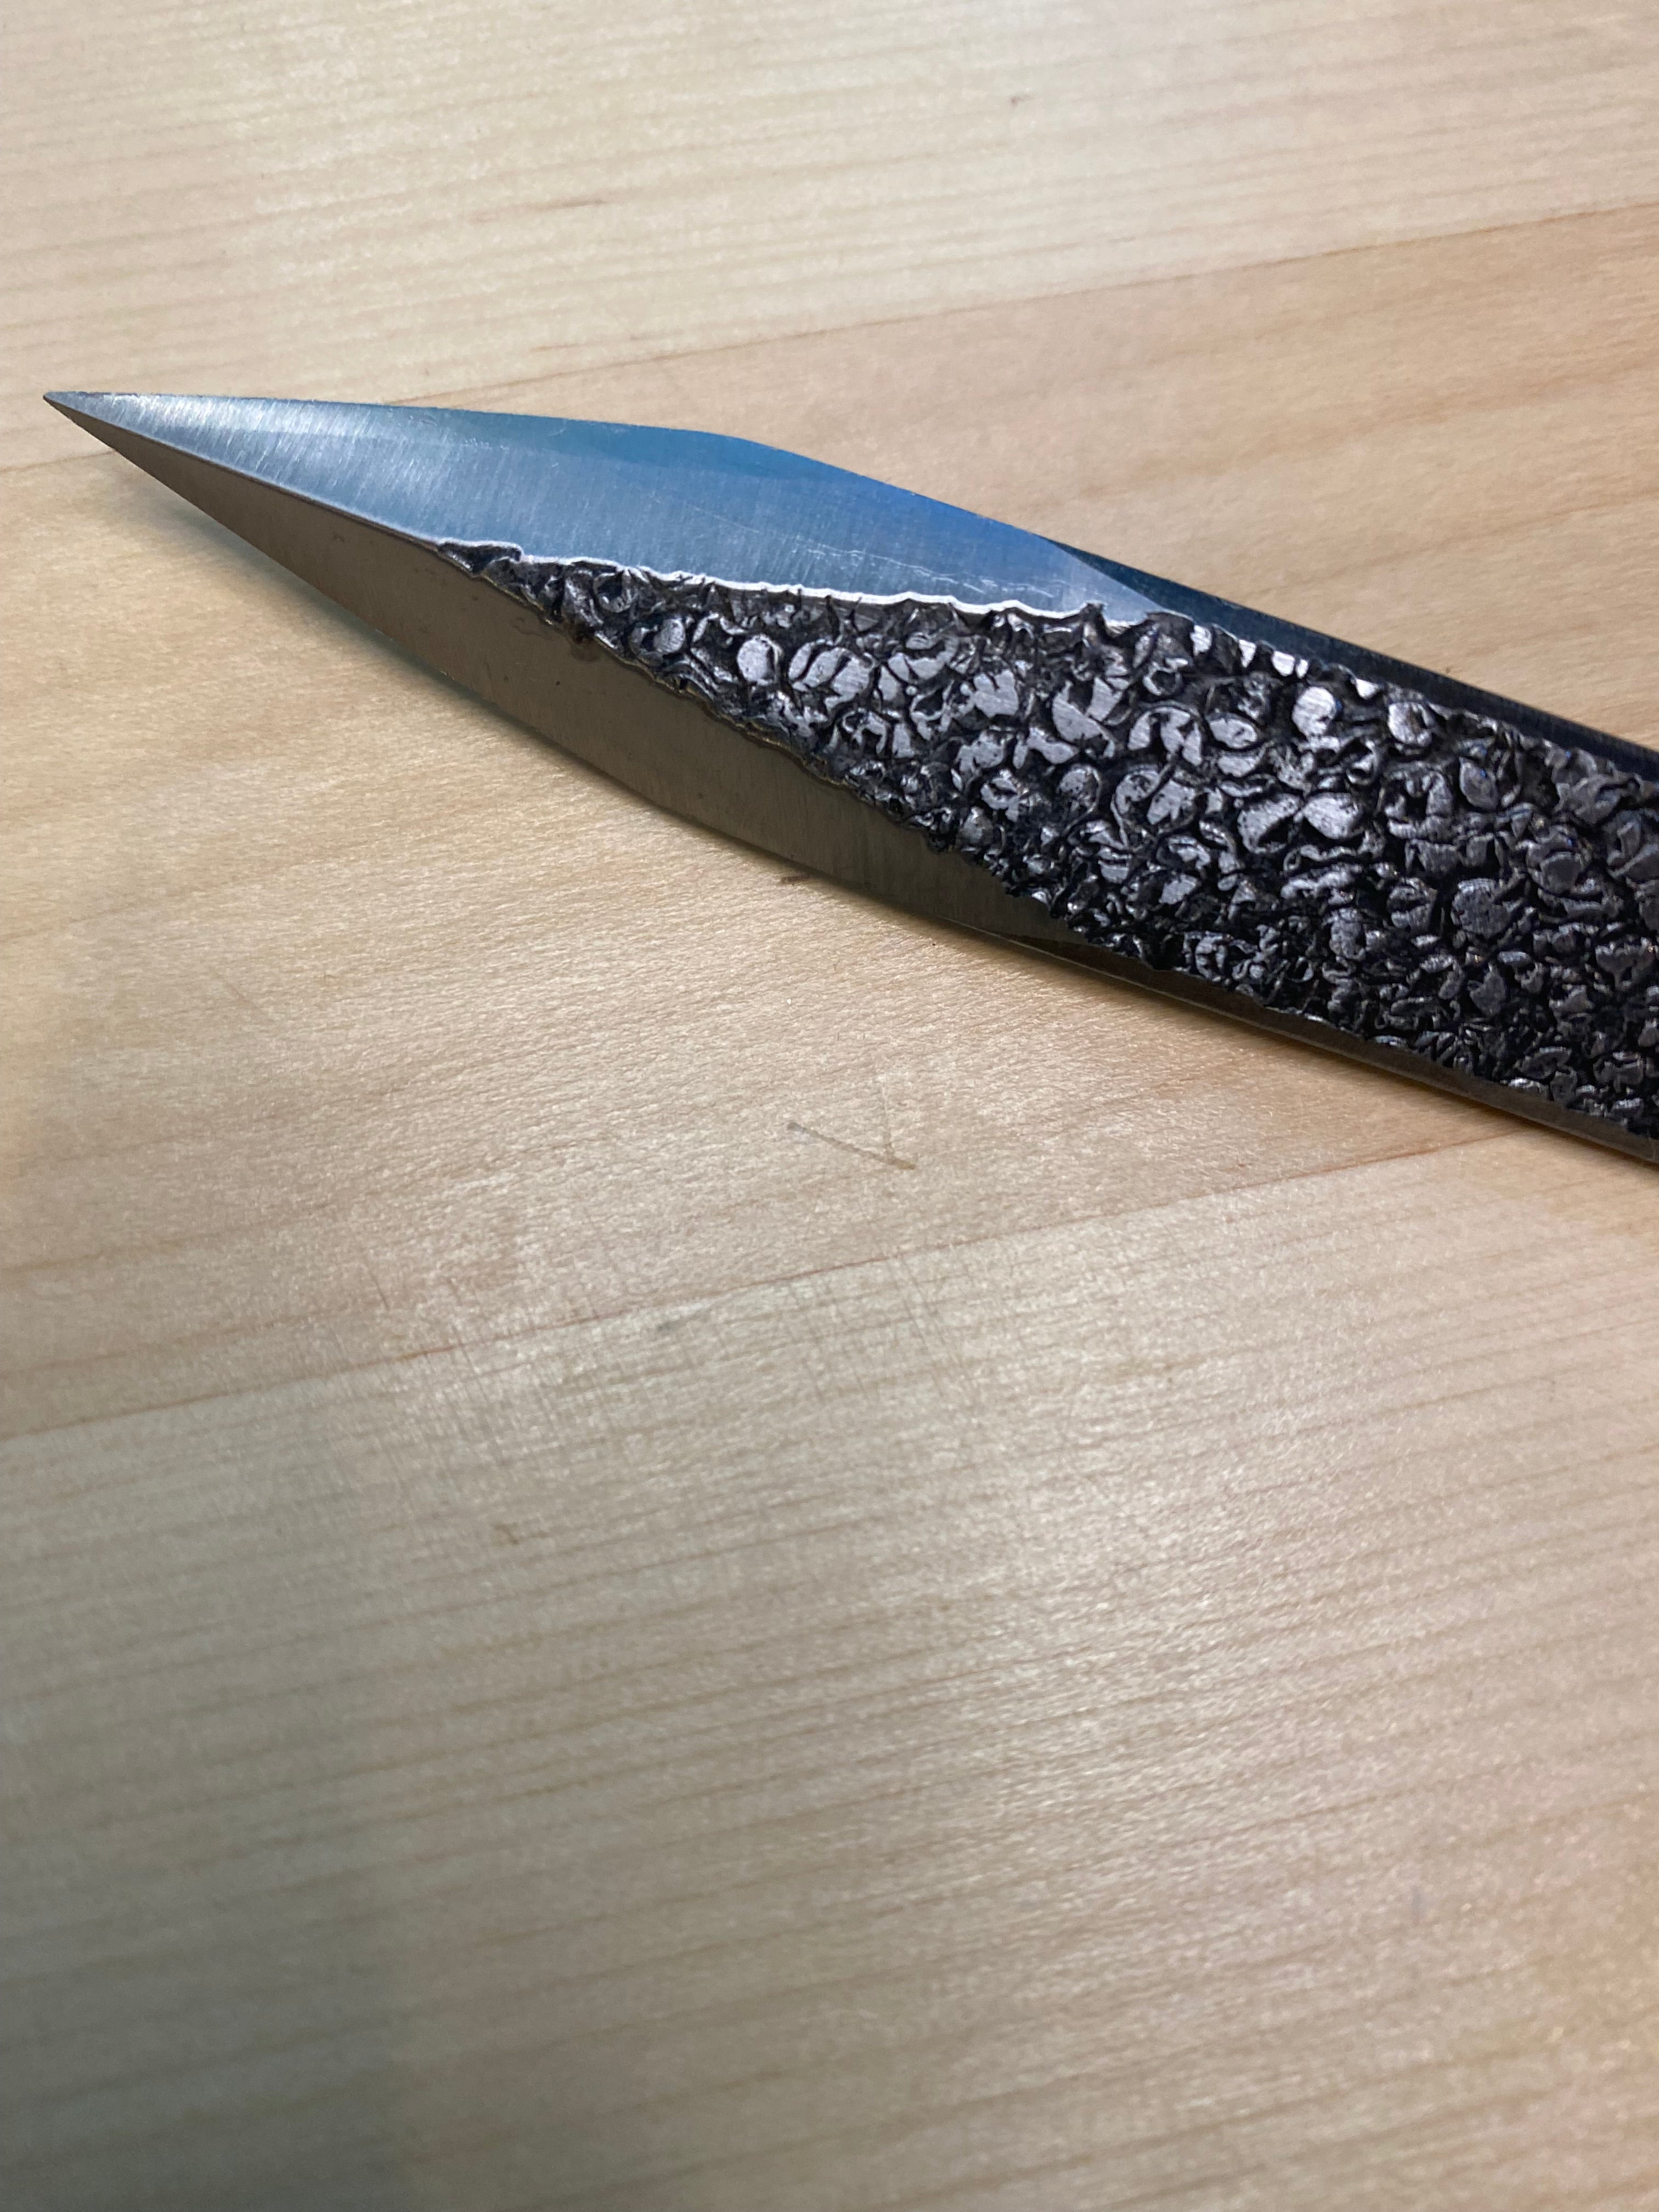 Marking Knife Kensaki Blade